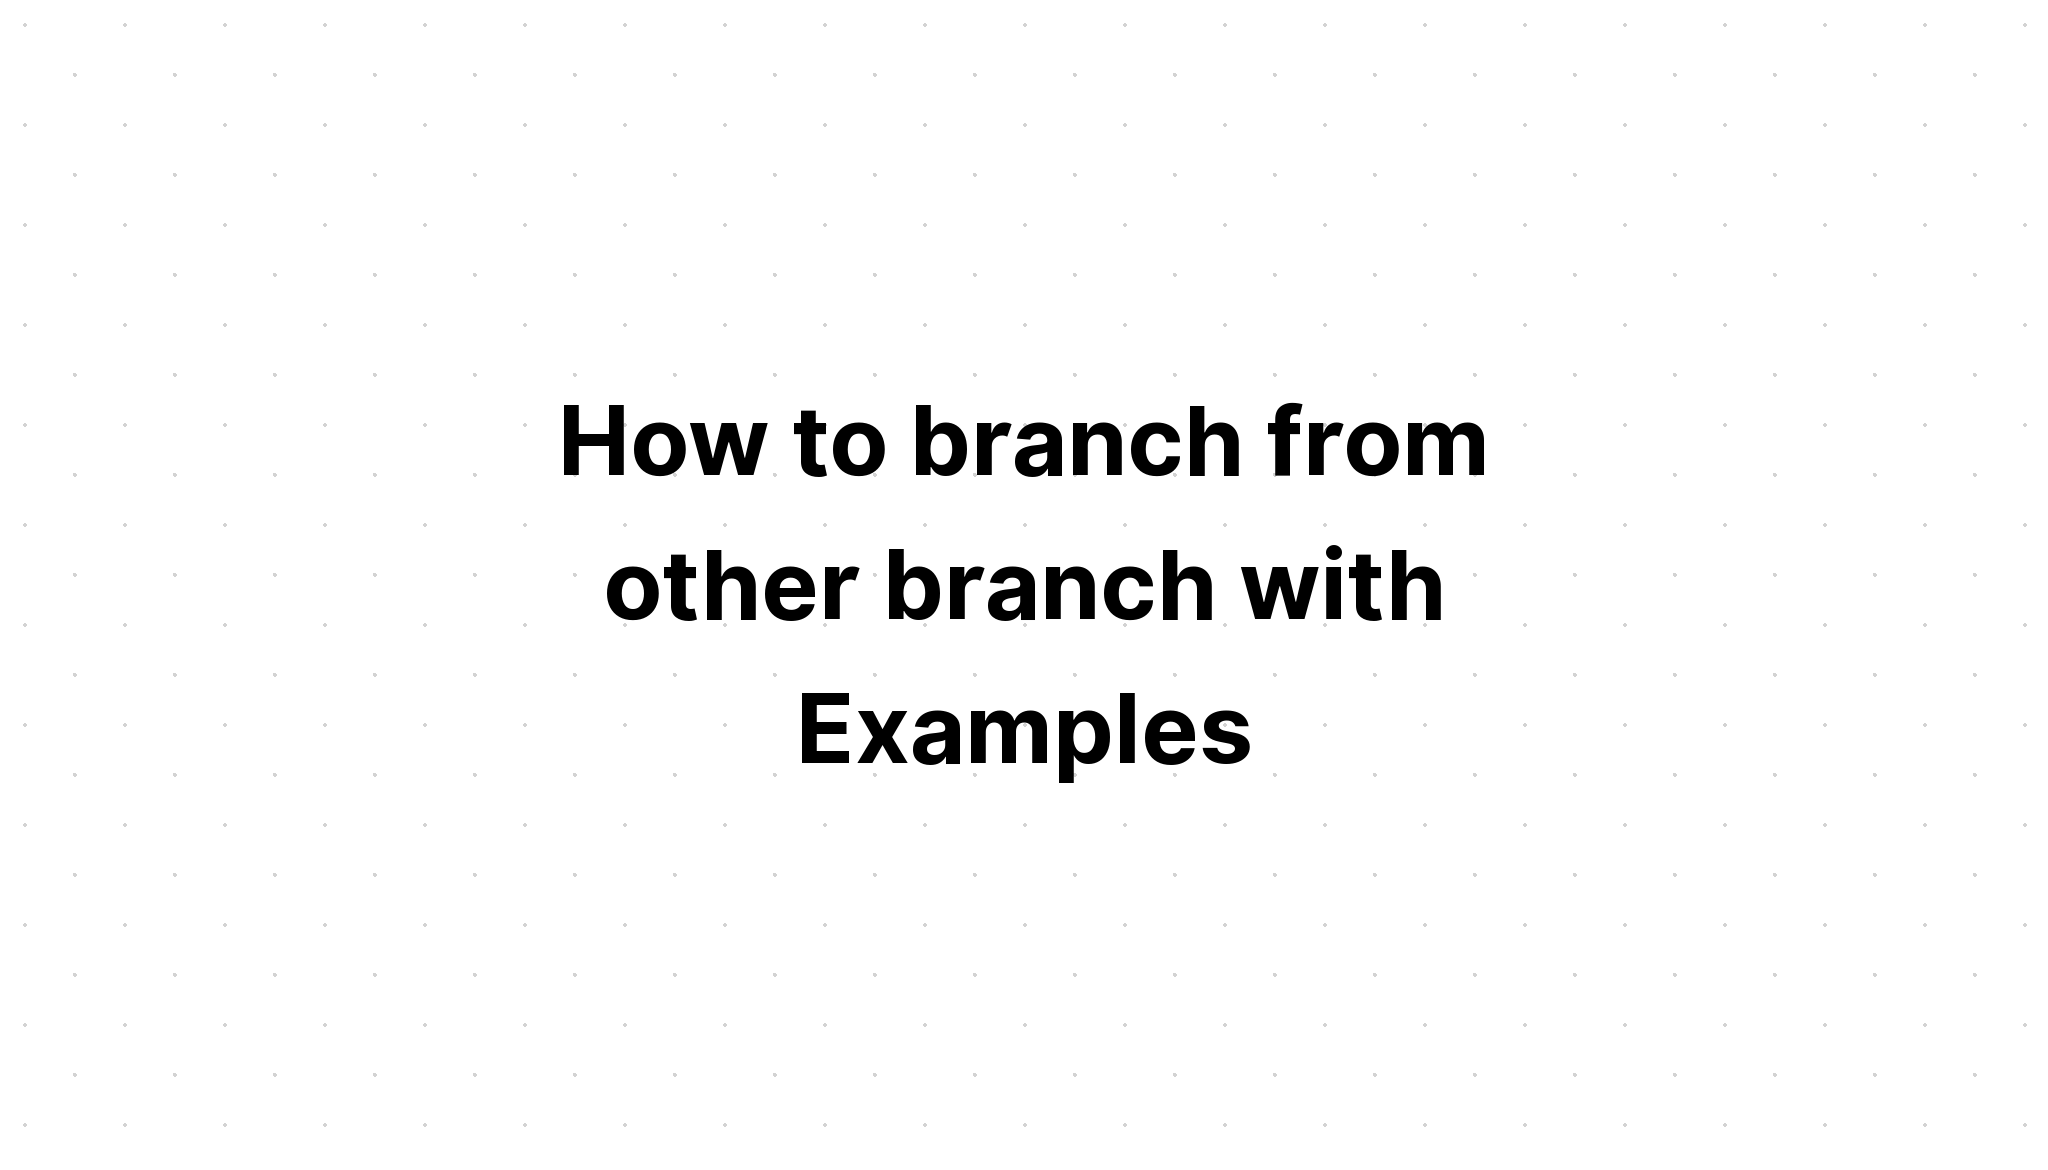 Cara membuat cabang dari cabang lain dengan Contoh